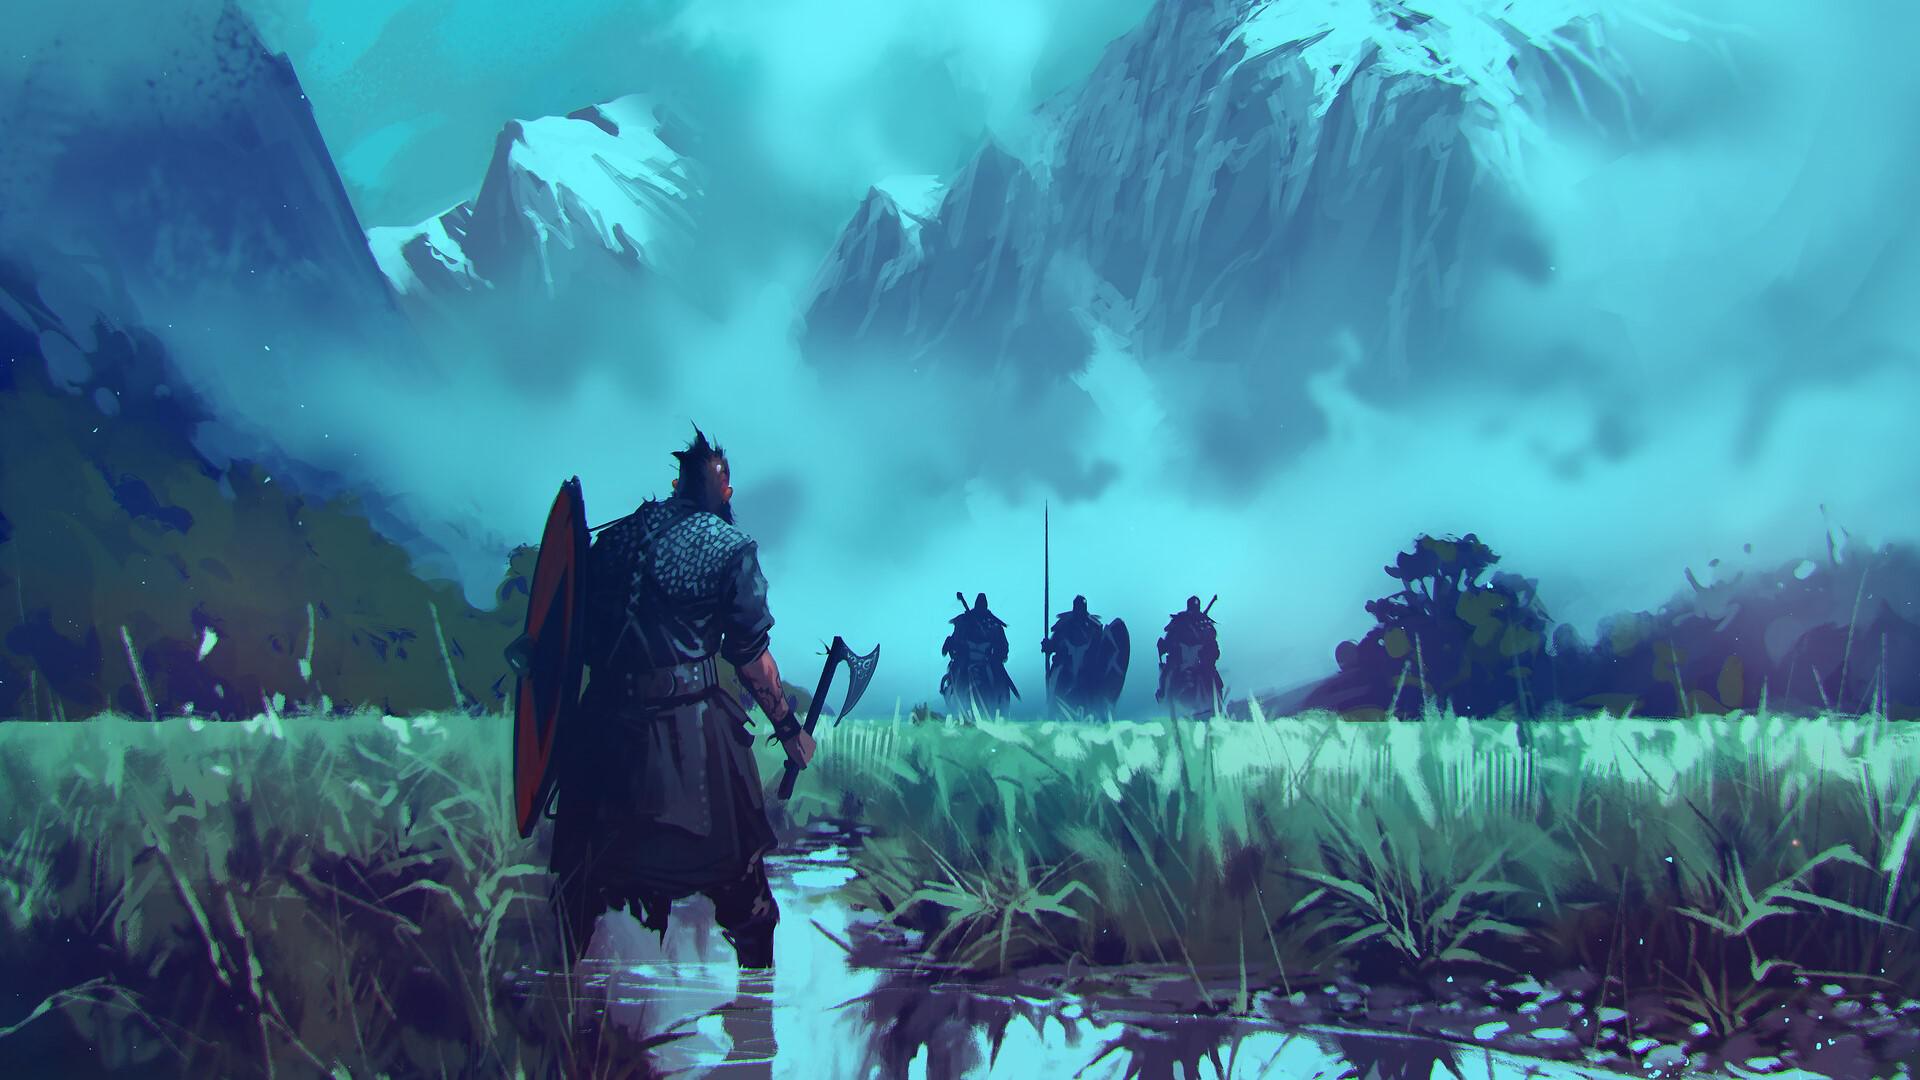 Warrior Fighting Alone - HD Wallpaper 